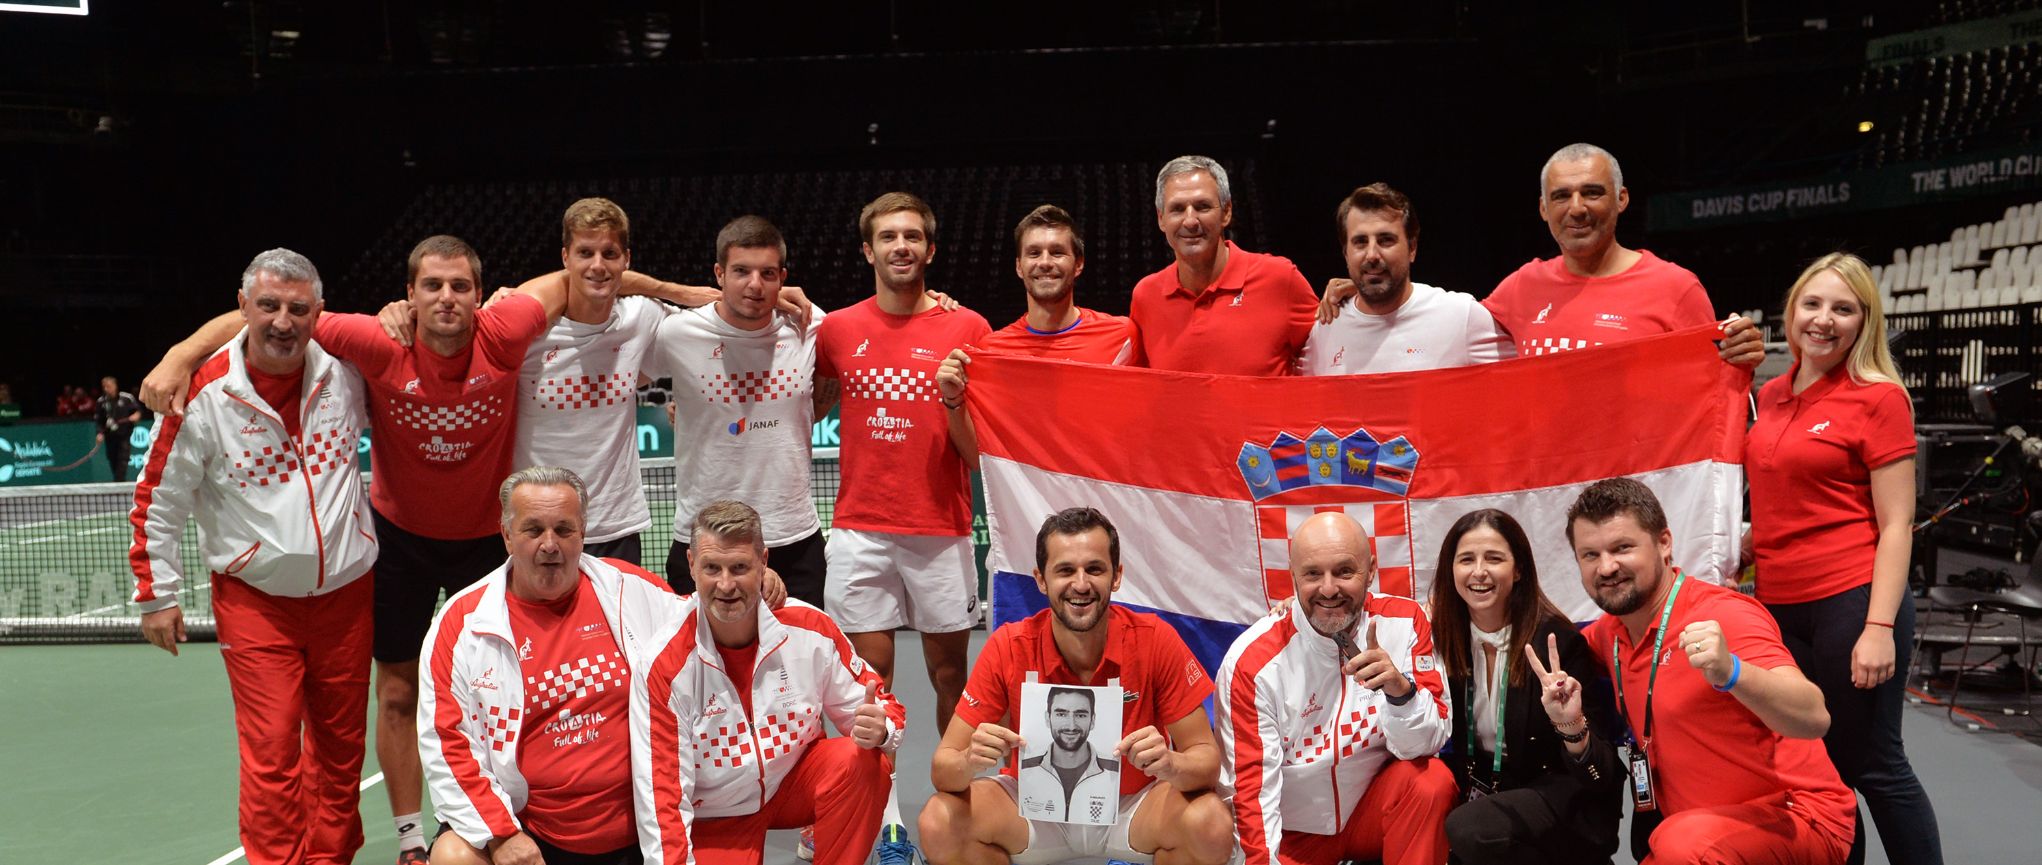 Davis Cup: Hrvatska u Malagu s najjačom postavom